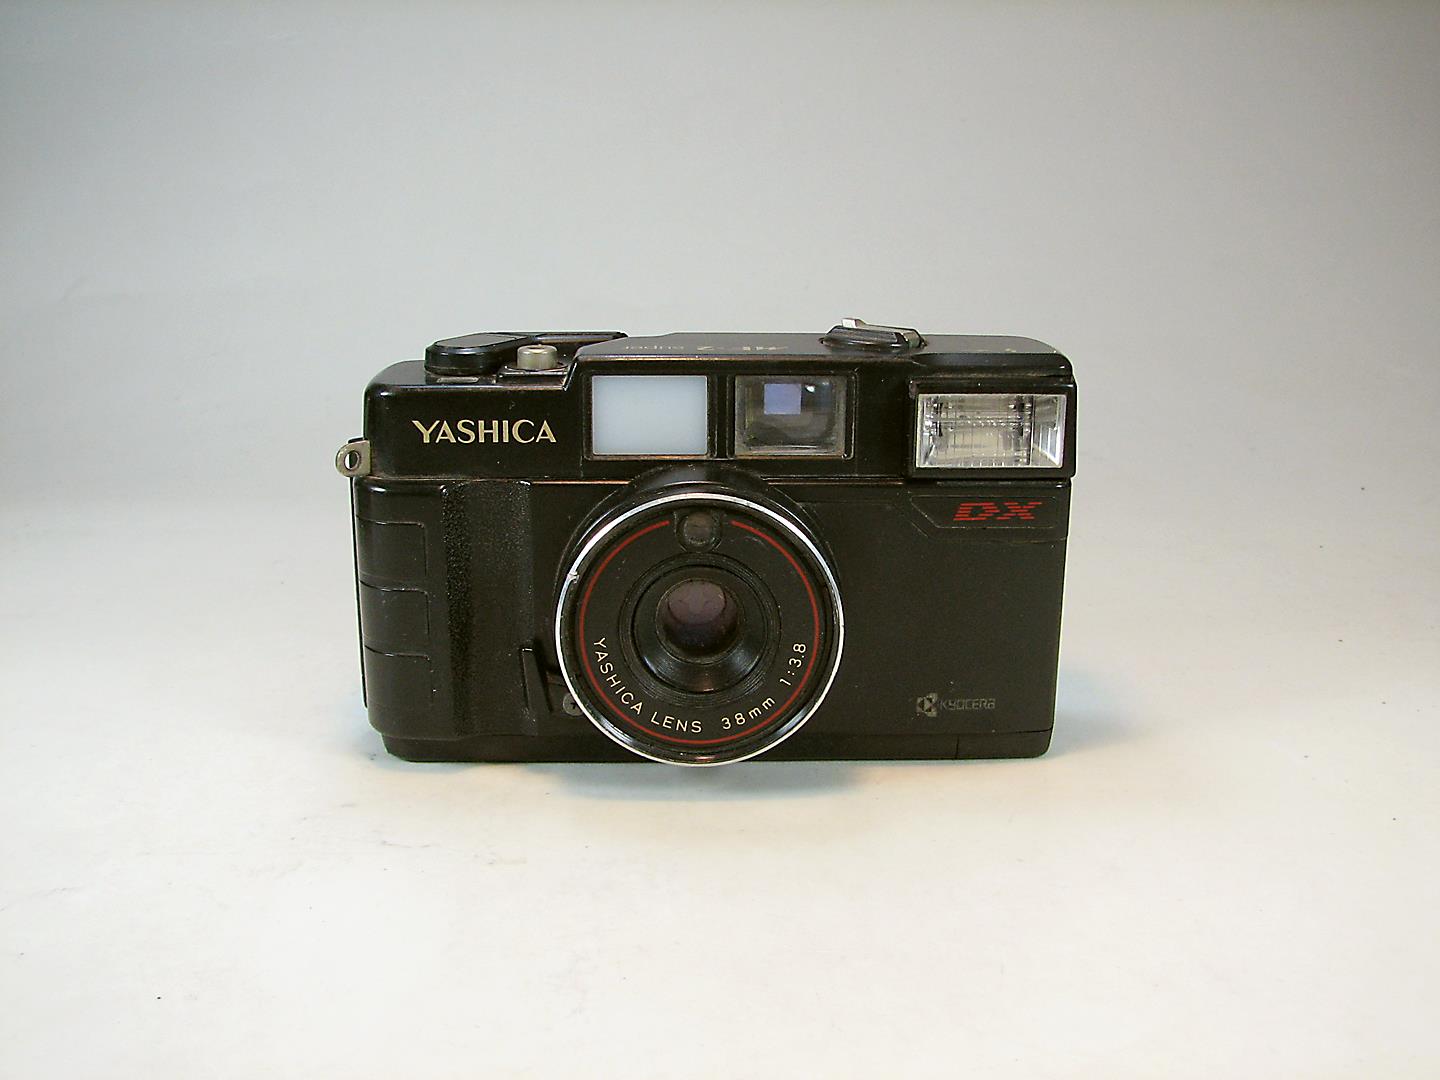 دوربین یاشیکا YASHICA MF-2 DX 